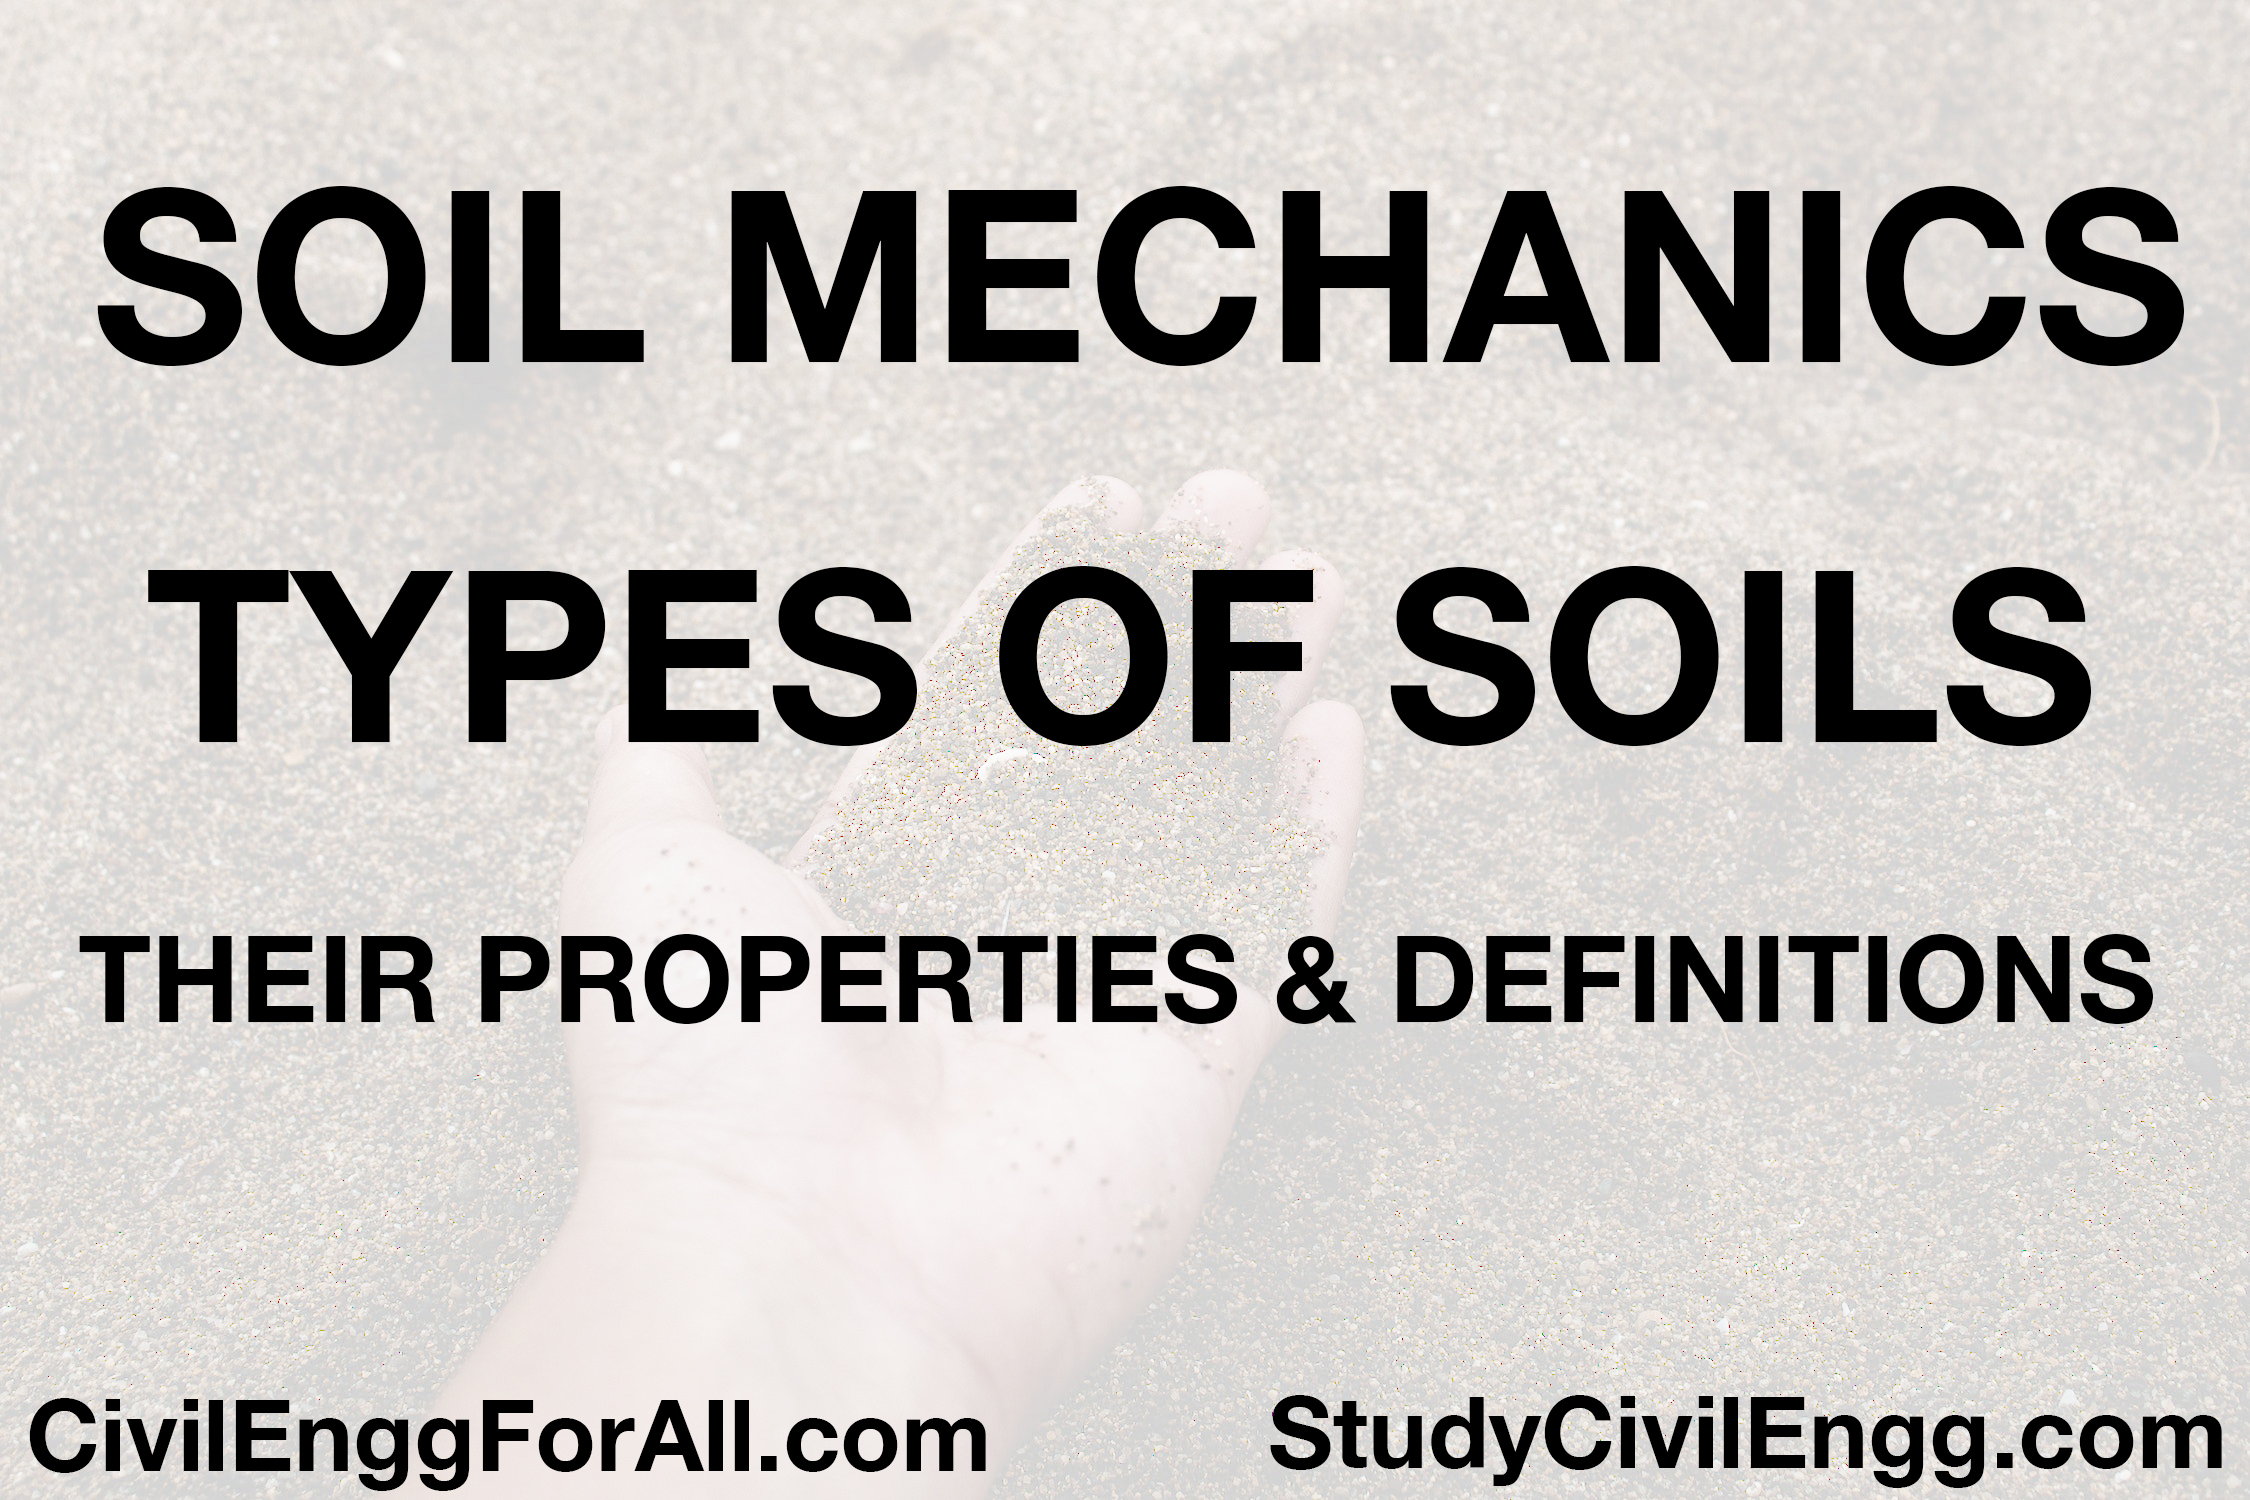 Types of Soils - Their definitions and properties - Soil Mechanics - StudyCivilEngg.com